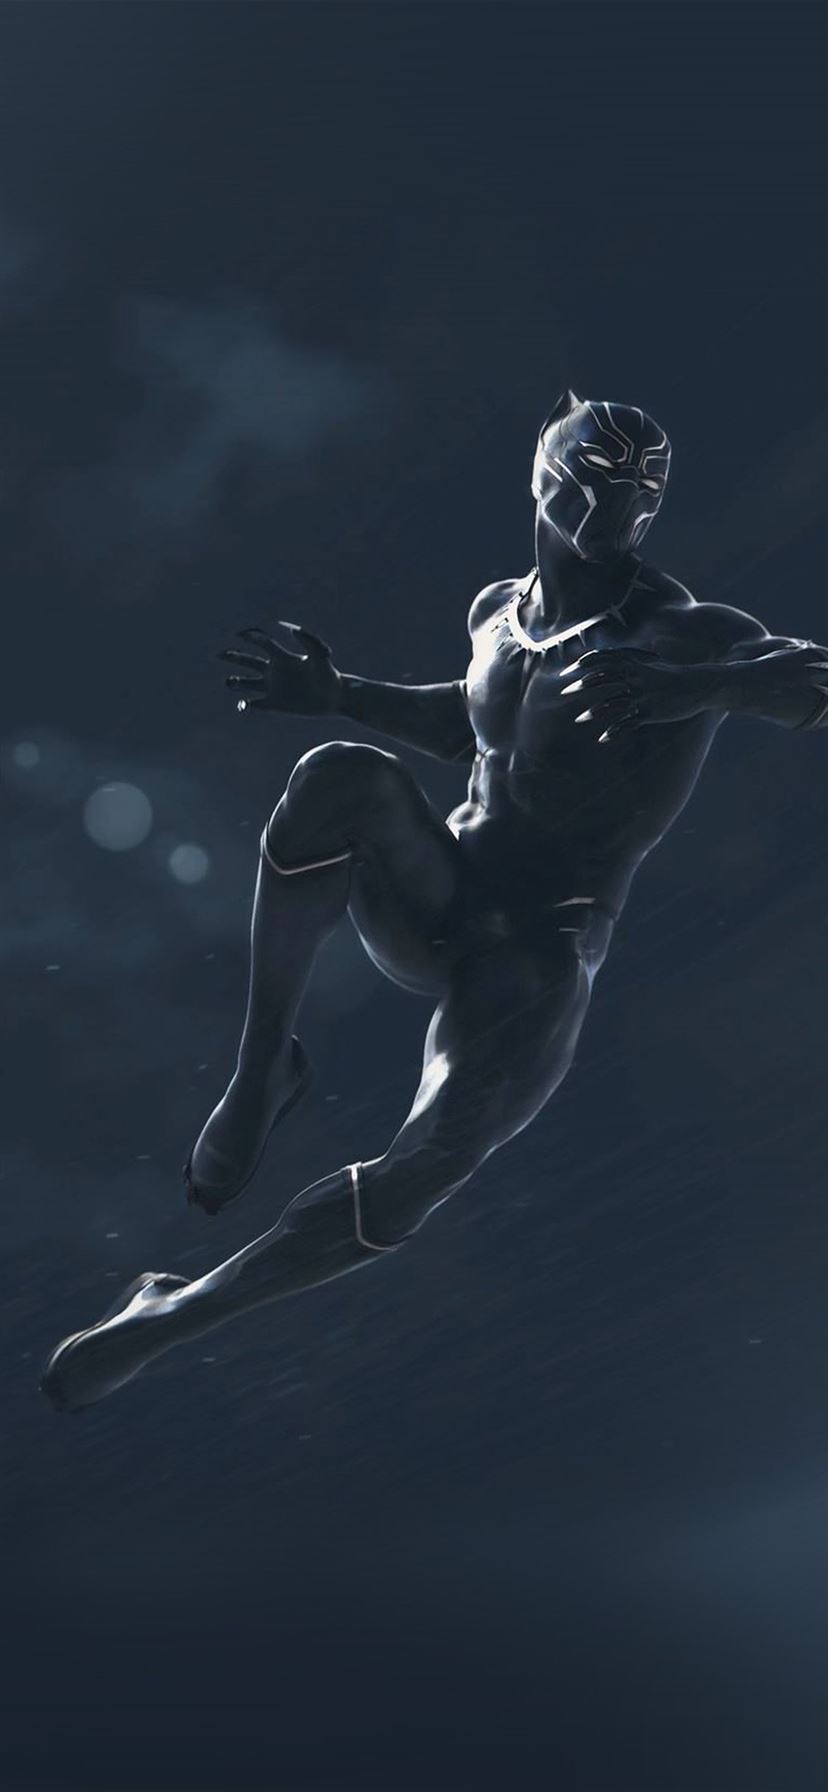 Marvel Black Panther Dark Art Illustration Iphone X Wallpapers Free Download